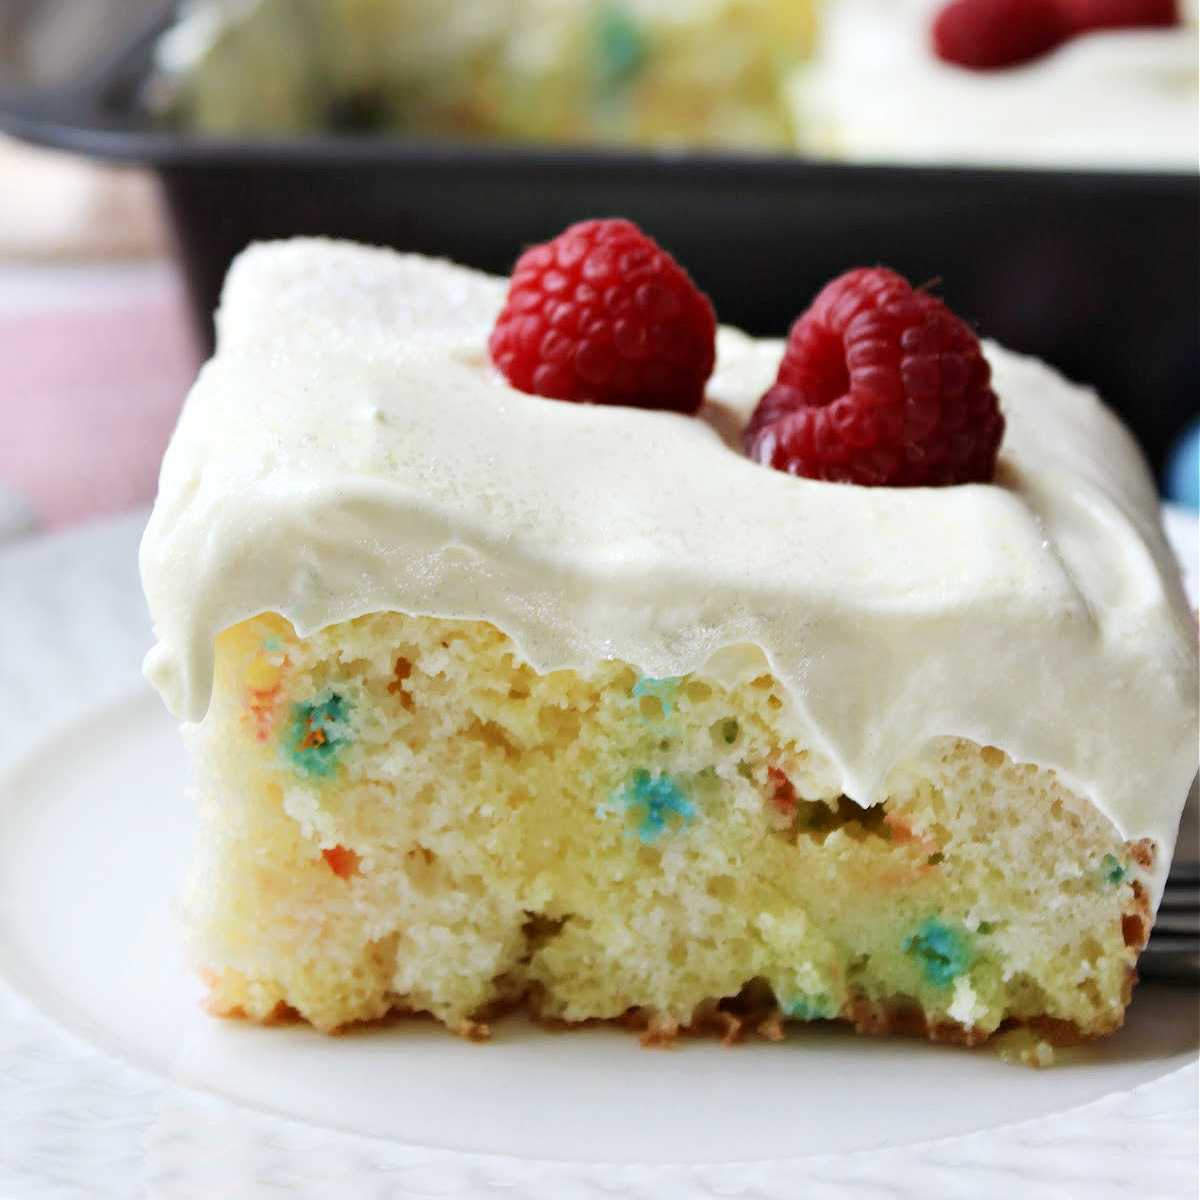 Lemon poke cake on a white plate with raspberries on top.